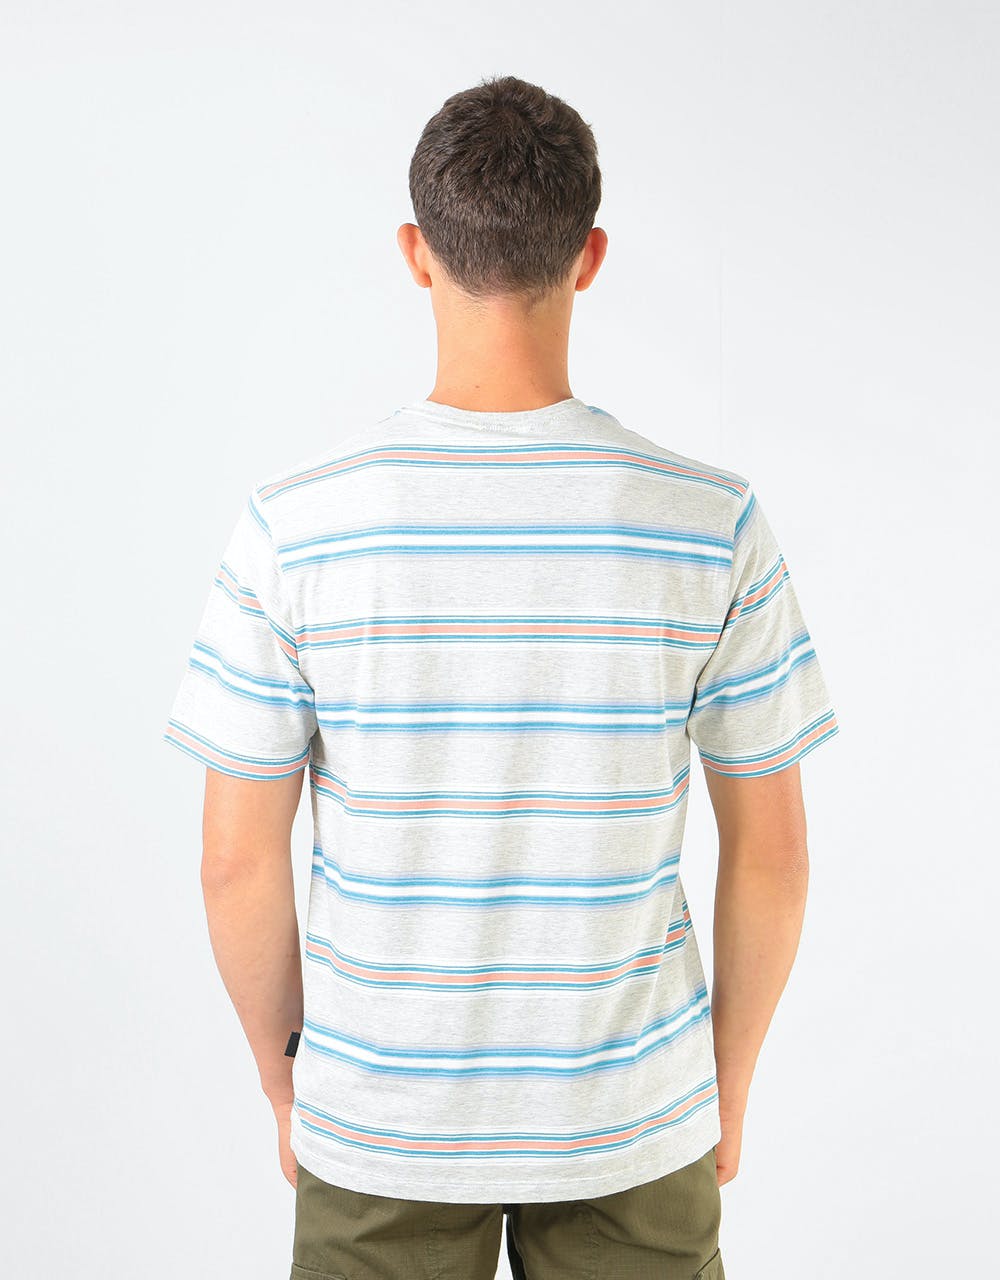 Patagonia Squeaky Clean Pocket T-Shirt - Tarkine Stripe: Tailored Grey